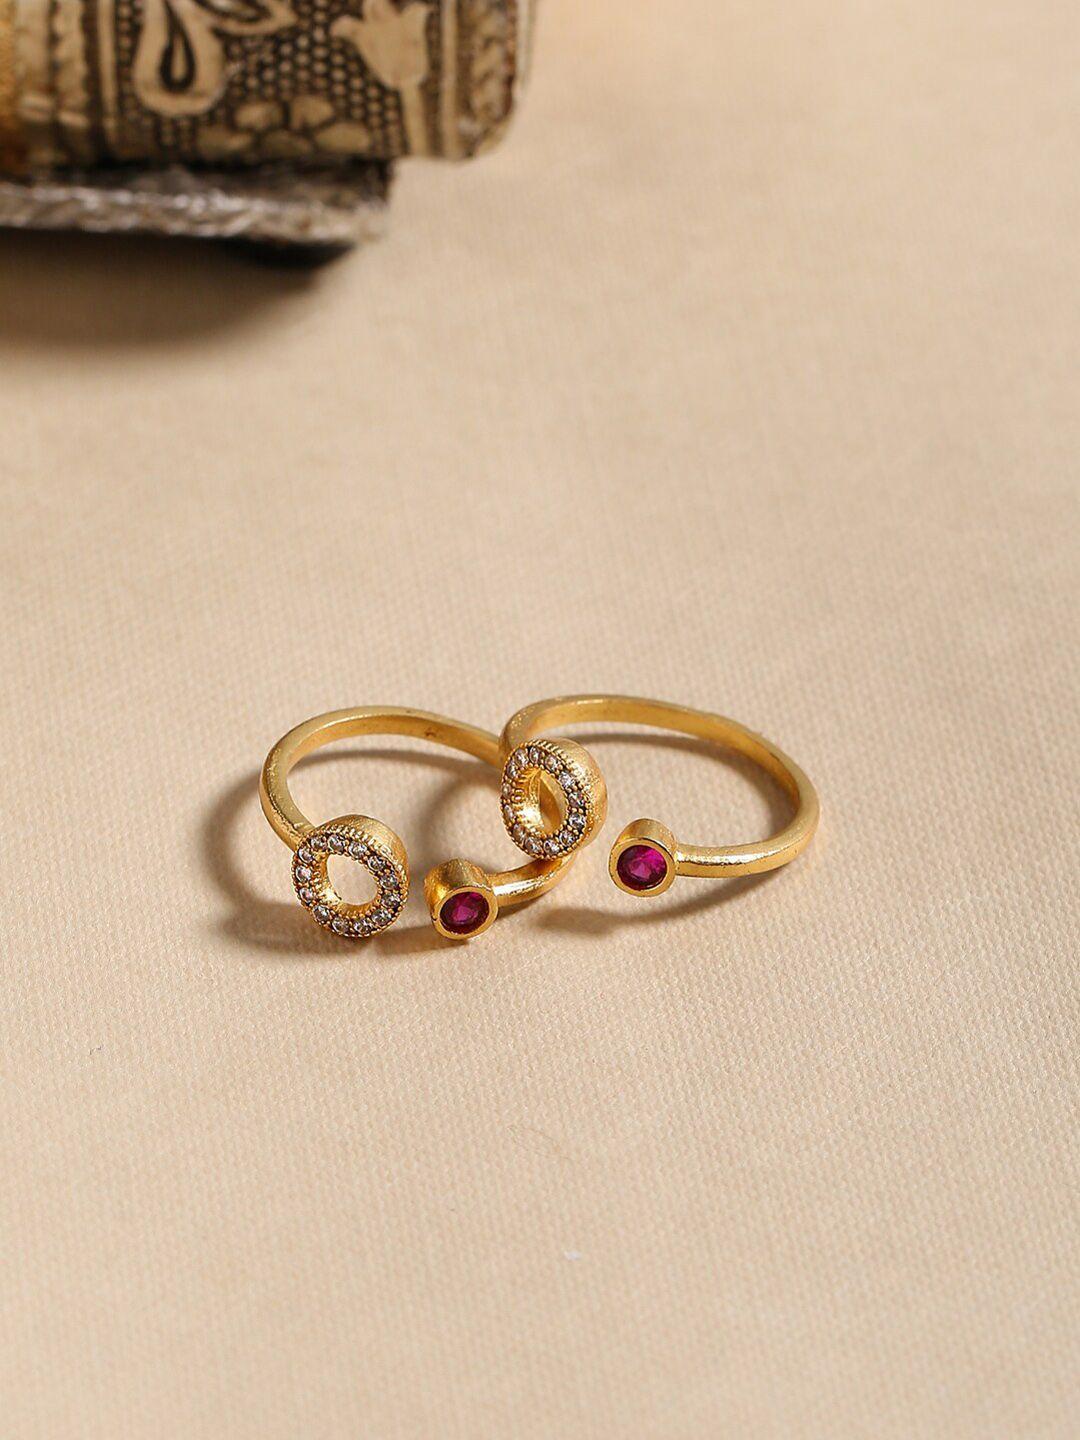 shoshaa set of 2 gold-plated white & pink stone-studded toe rings